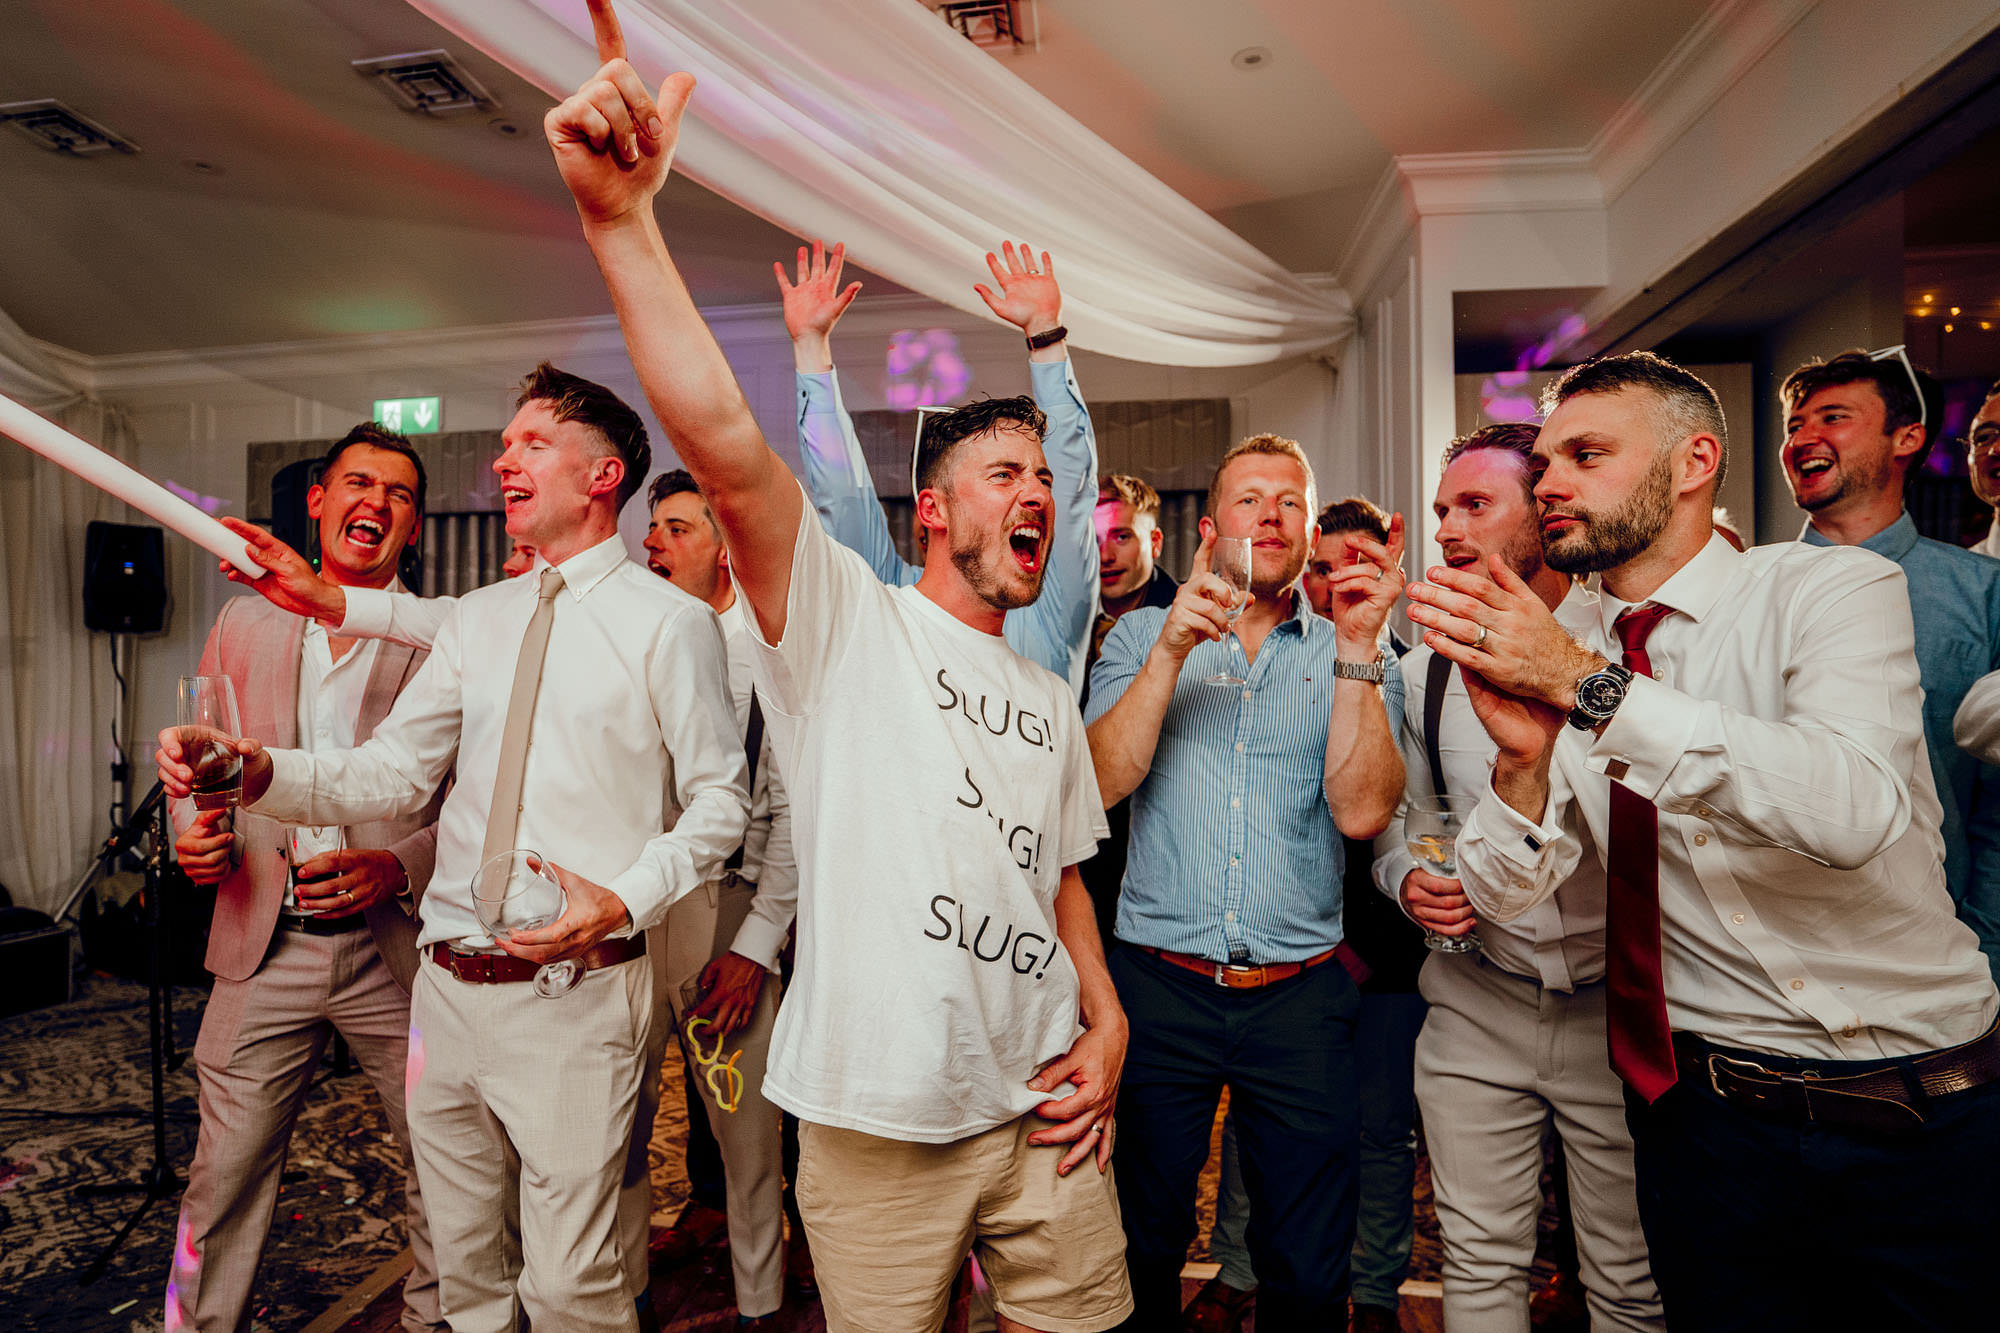 coniston hotel wedding party events hamish irvine 